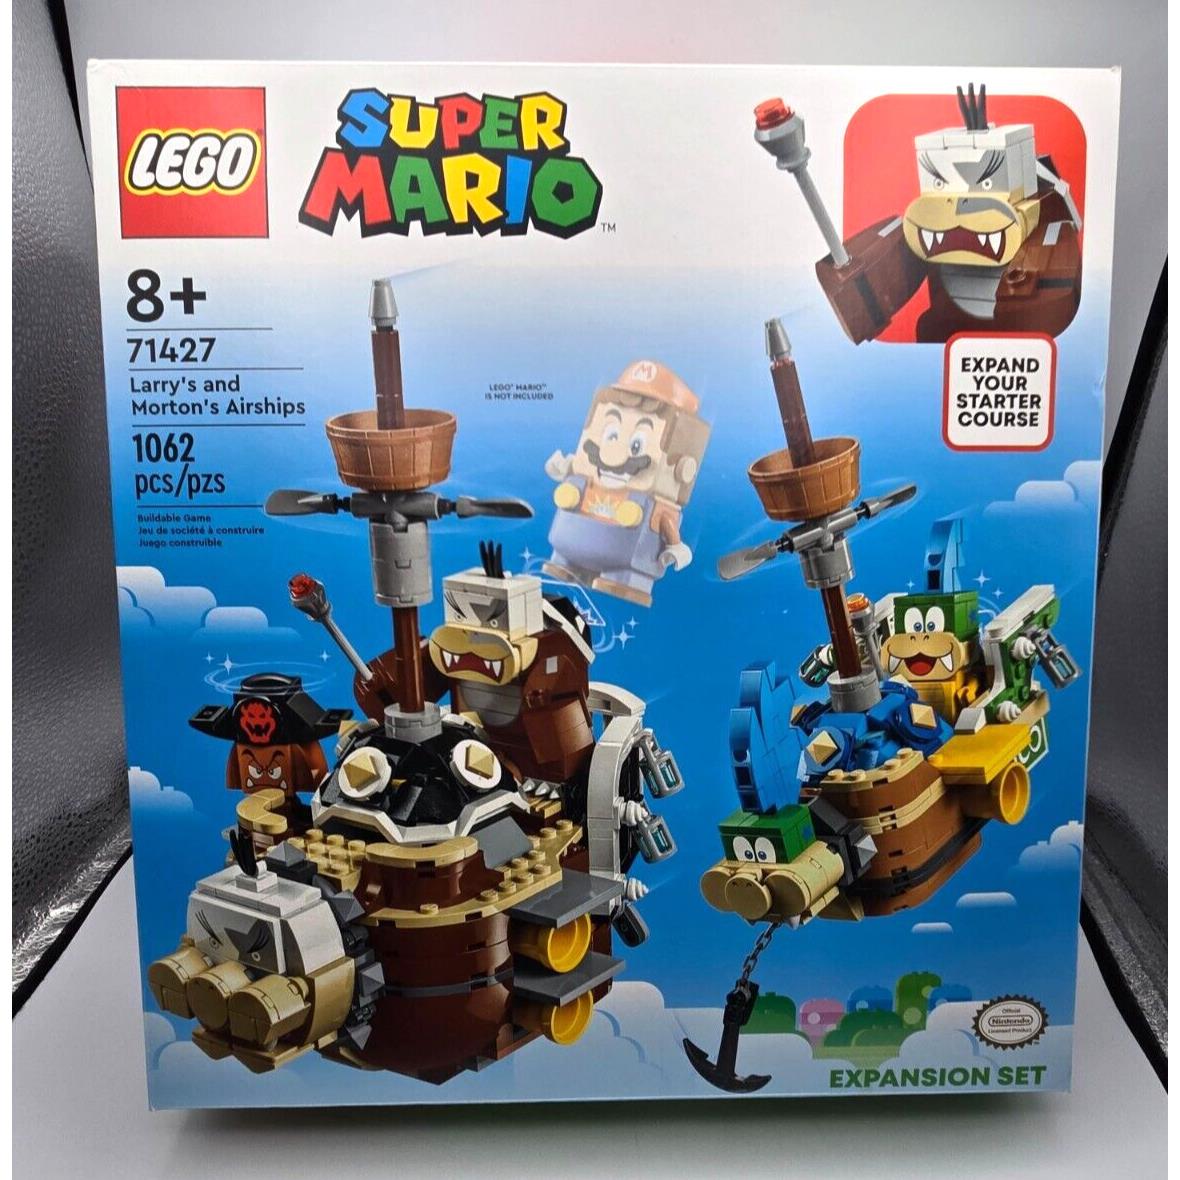 Lego Super Mario 71427 Larry`s and Morton`s Airships Set - 1062 Pcs Nintendo